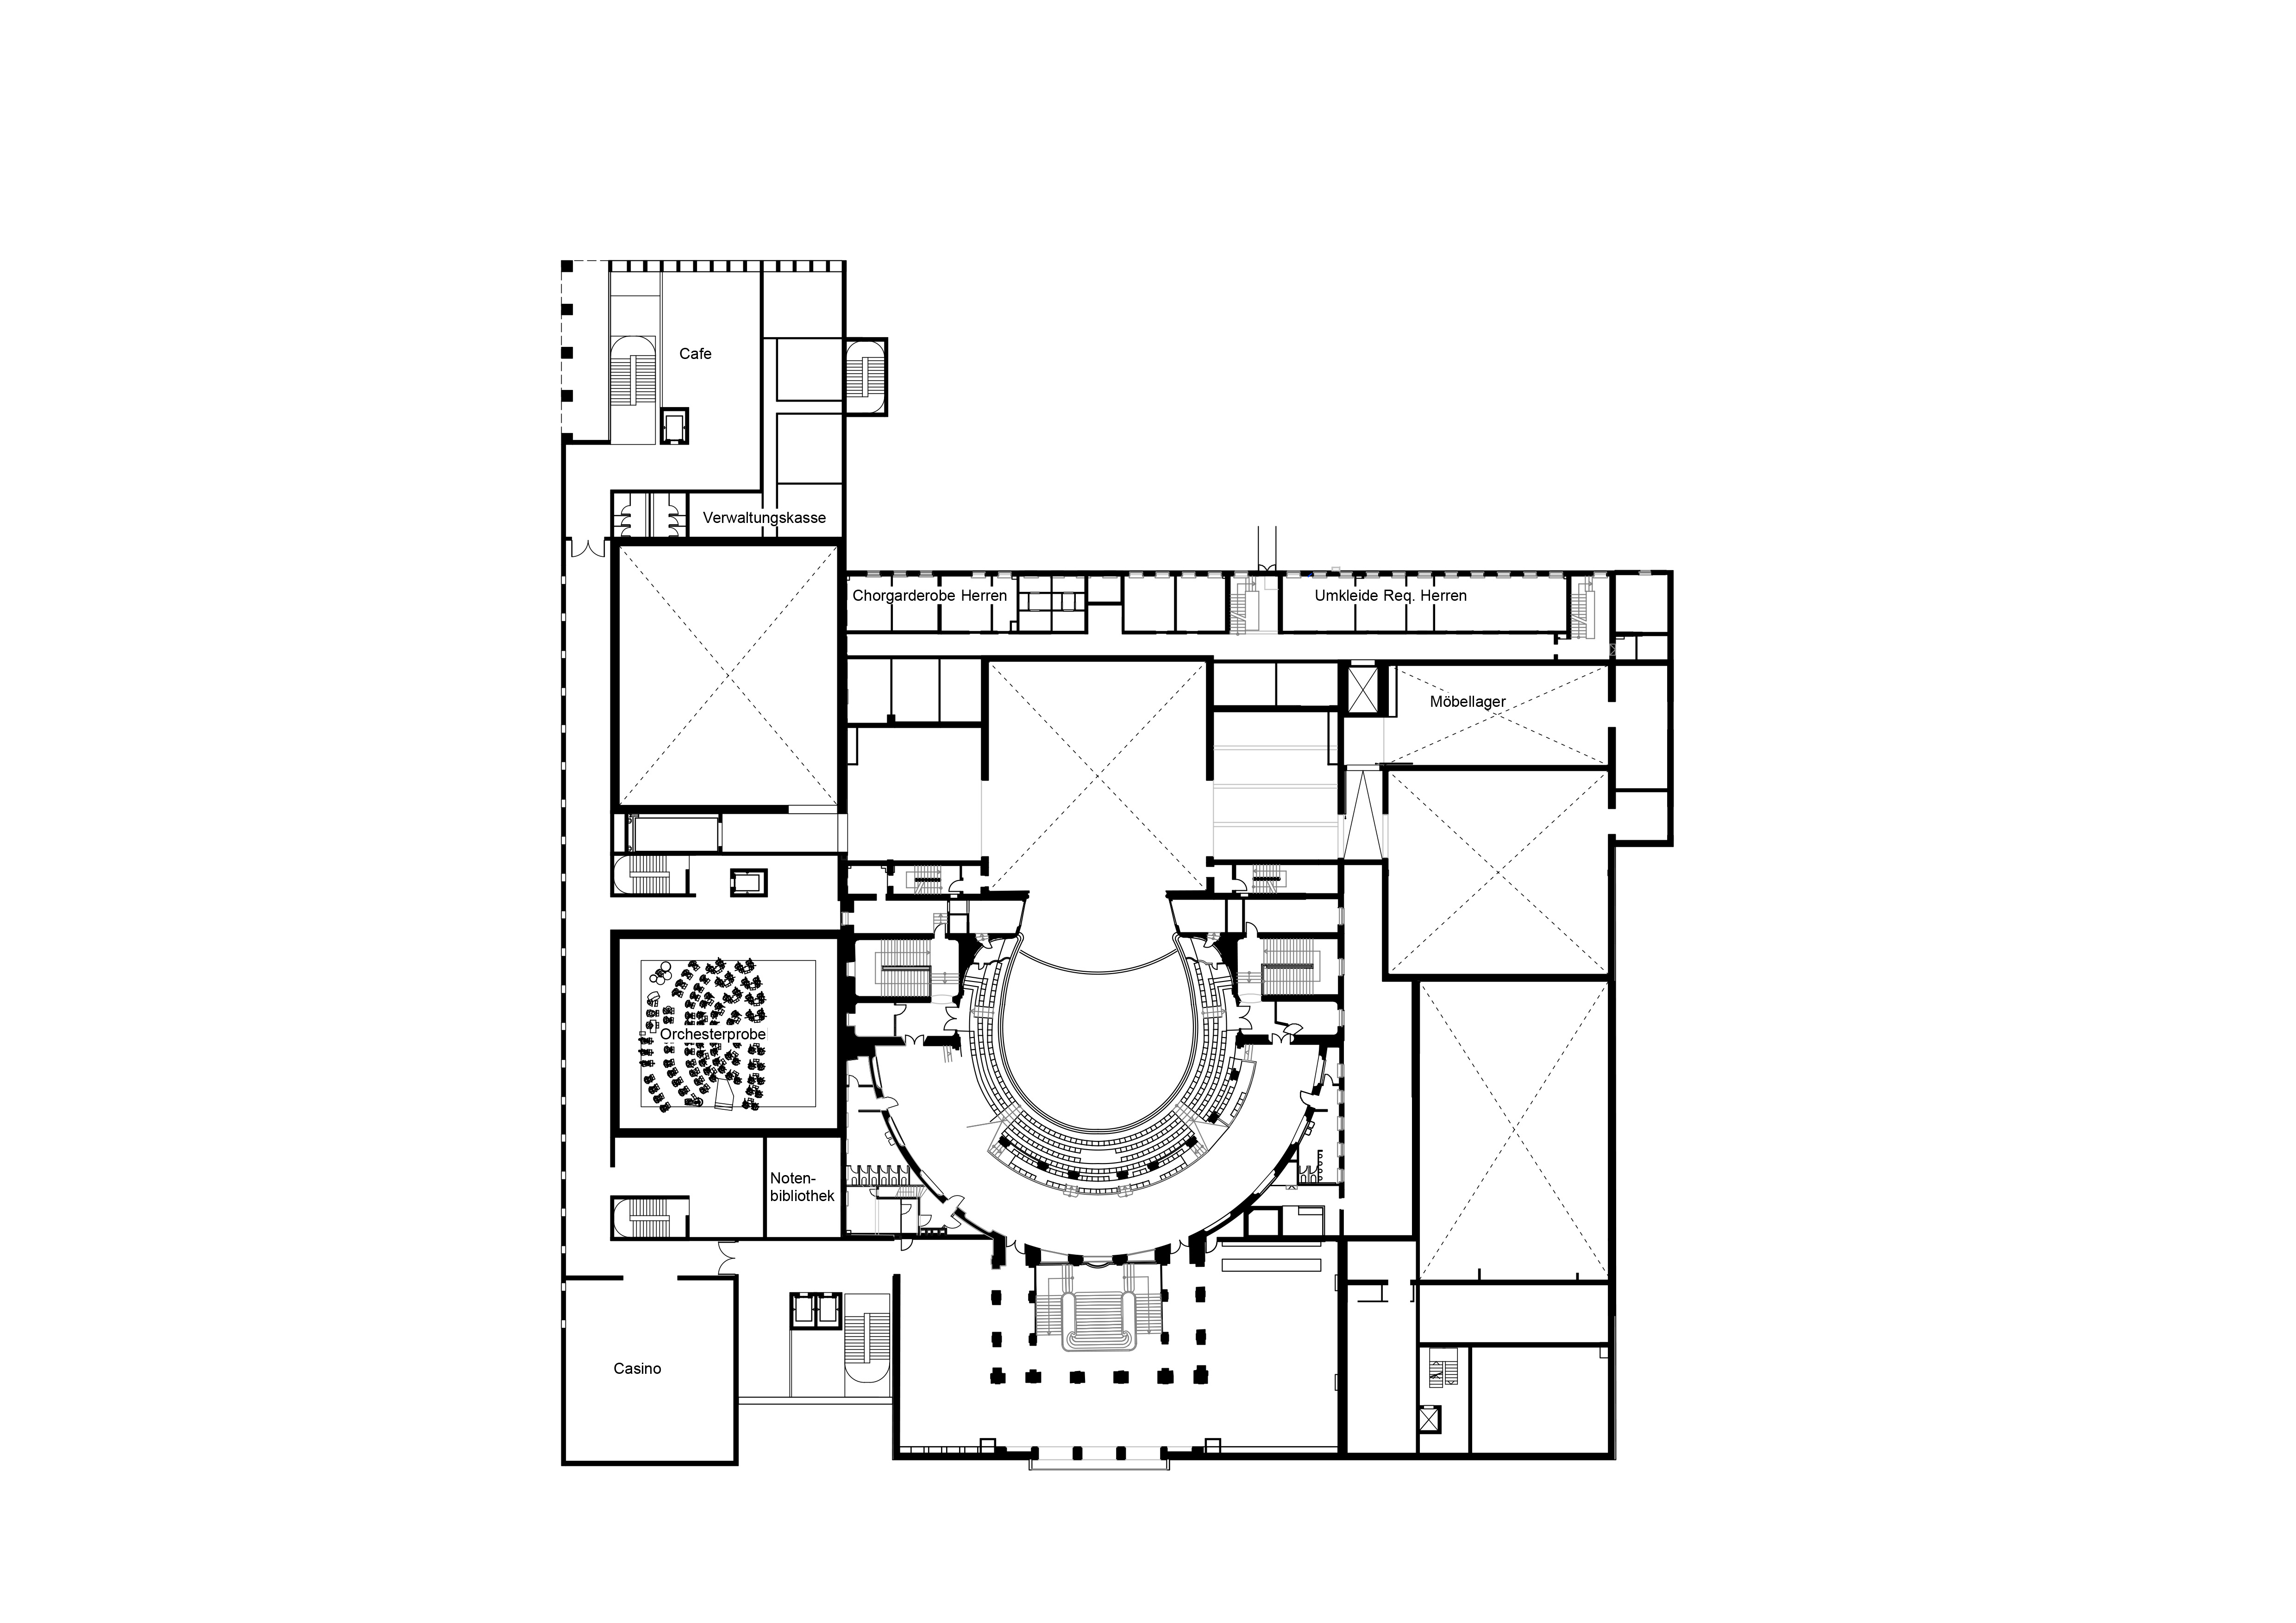 1st Floor Plan Komische Oper Berlin by Keith Williams Architects